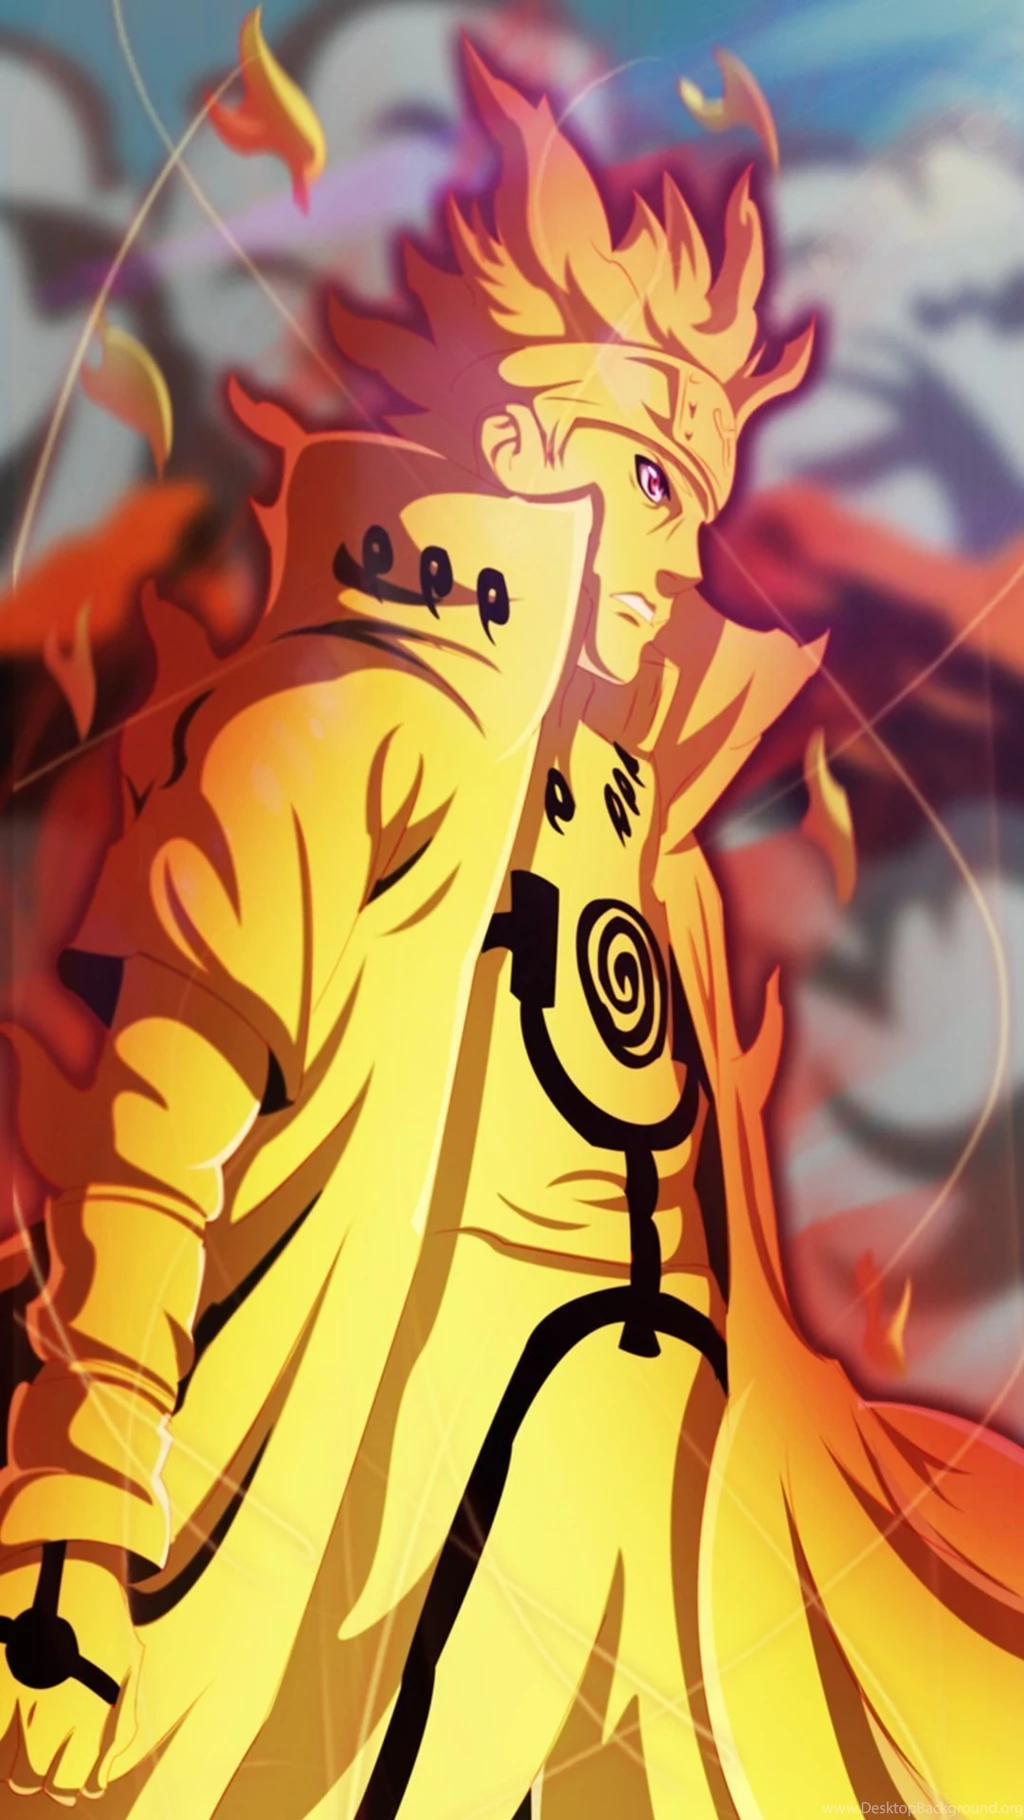 Naruto Iphone Wallpaper For Iphone 6 Plus 1080x19 Naruto Uzumaki Anime Mobile Wallpaper Hd Jpg Desktop Background